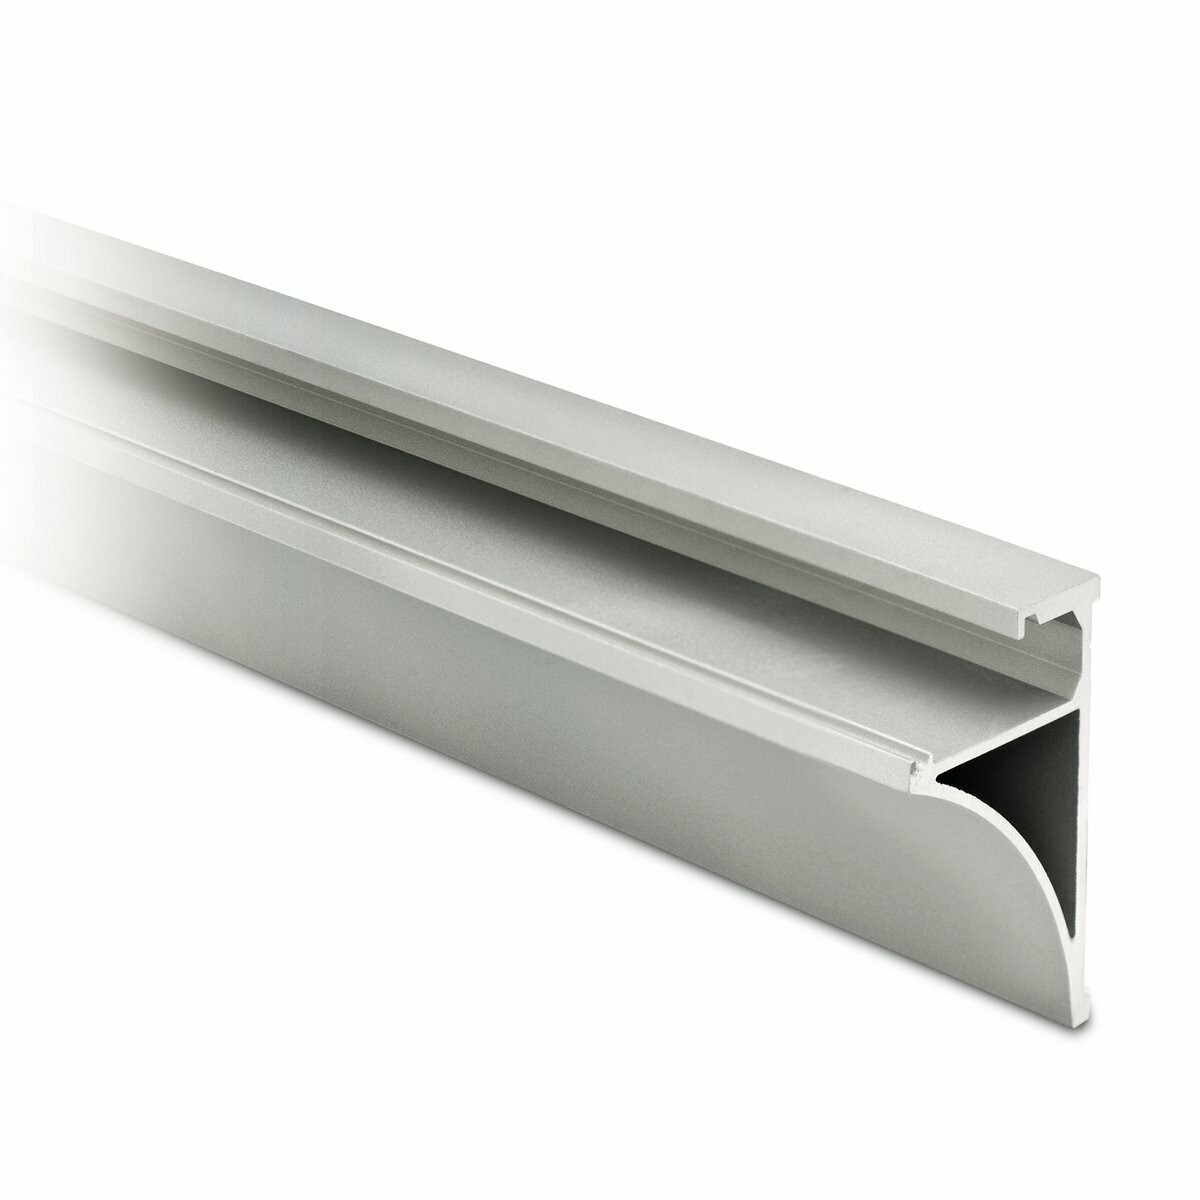 Profi Bord Glasplatten-Halteprofil Silber matt eloxiert